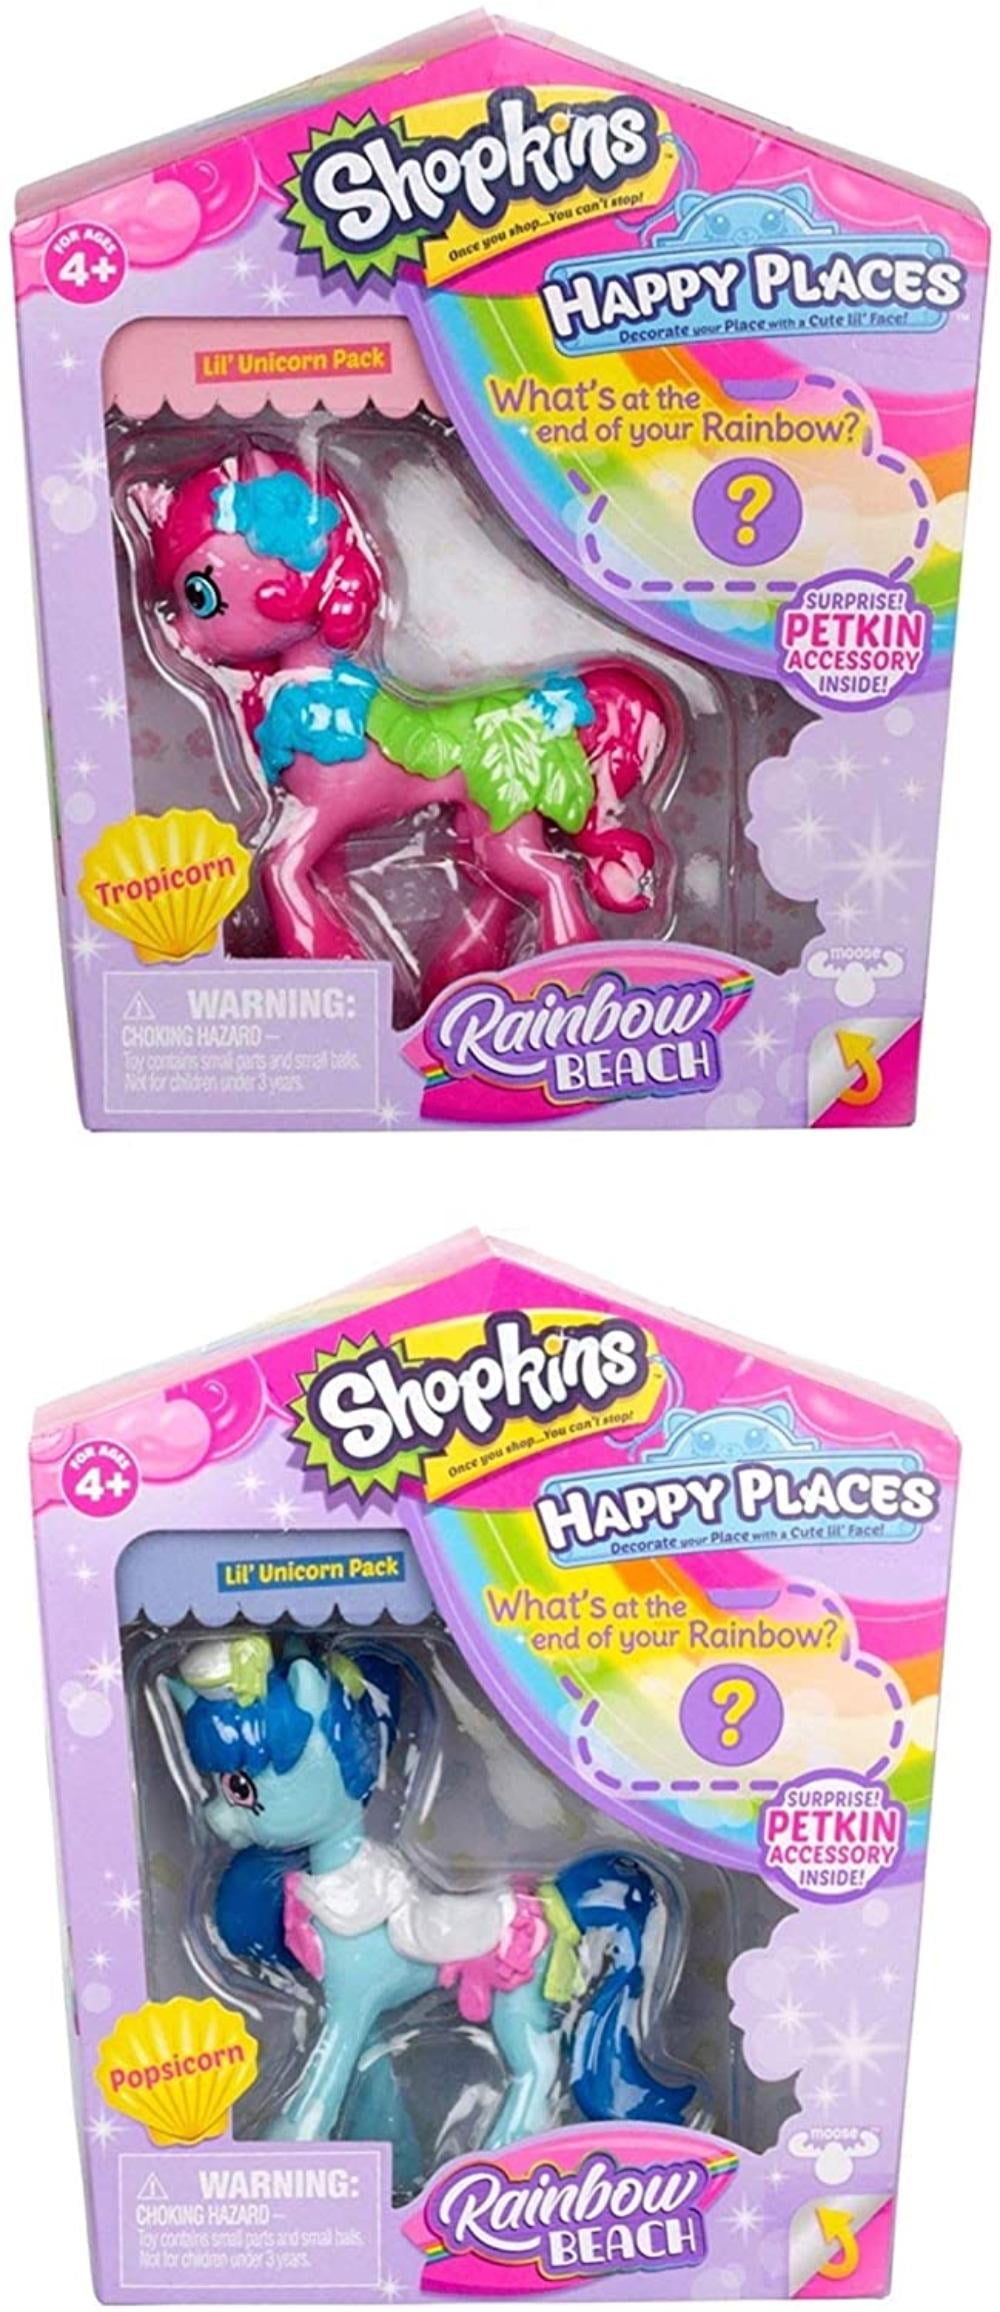 Popsicorn Happy Places Shopkins Rainbow Beach Lil Unicorn Pack Pack